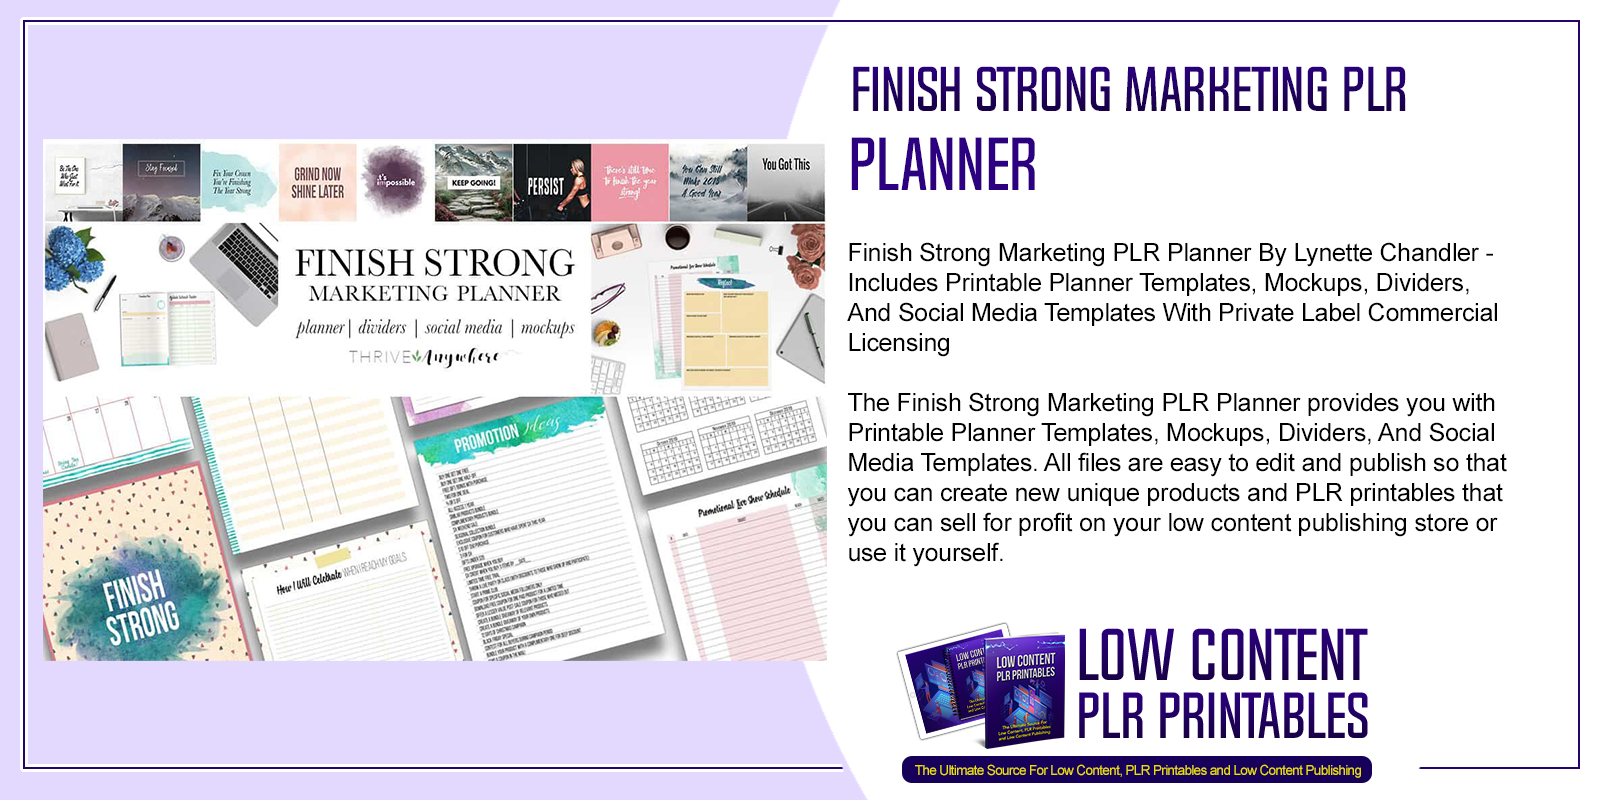 Finish Strong Marketing PLR Planner